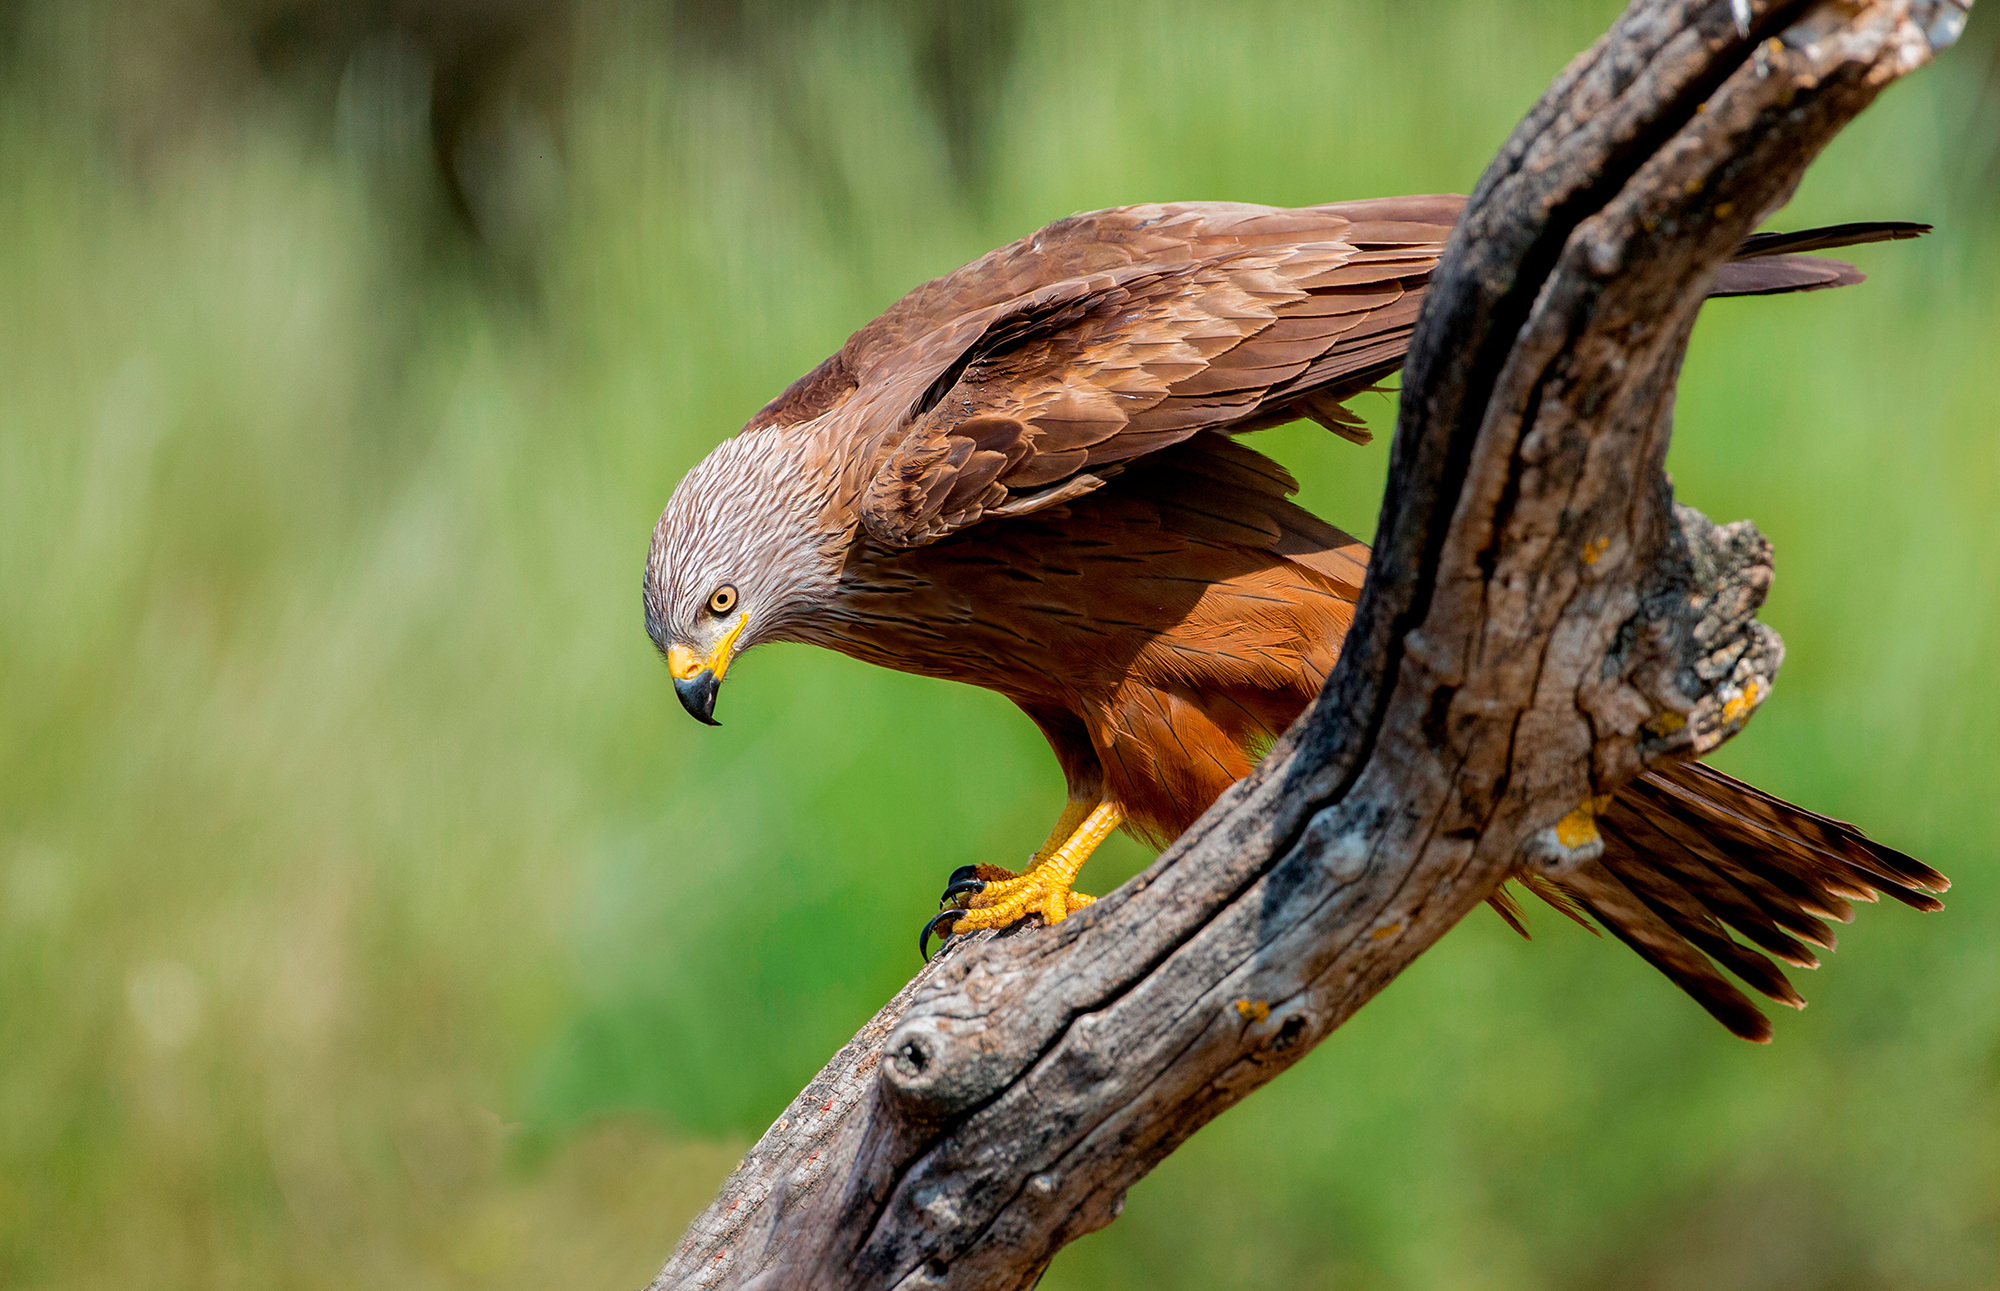 brown kite observes prey...